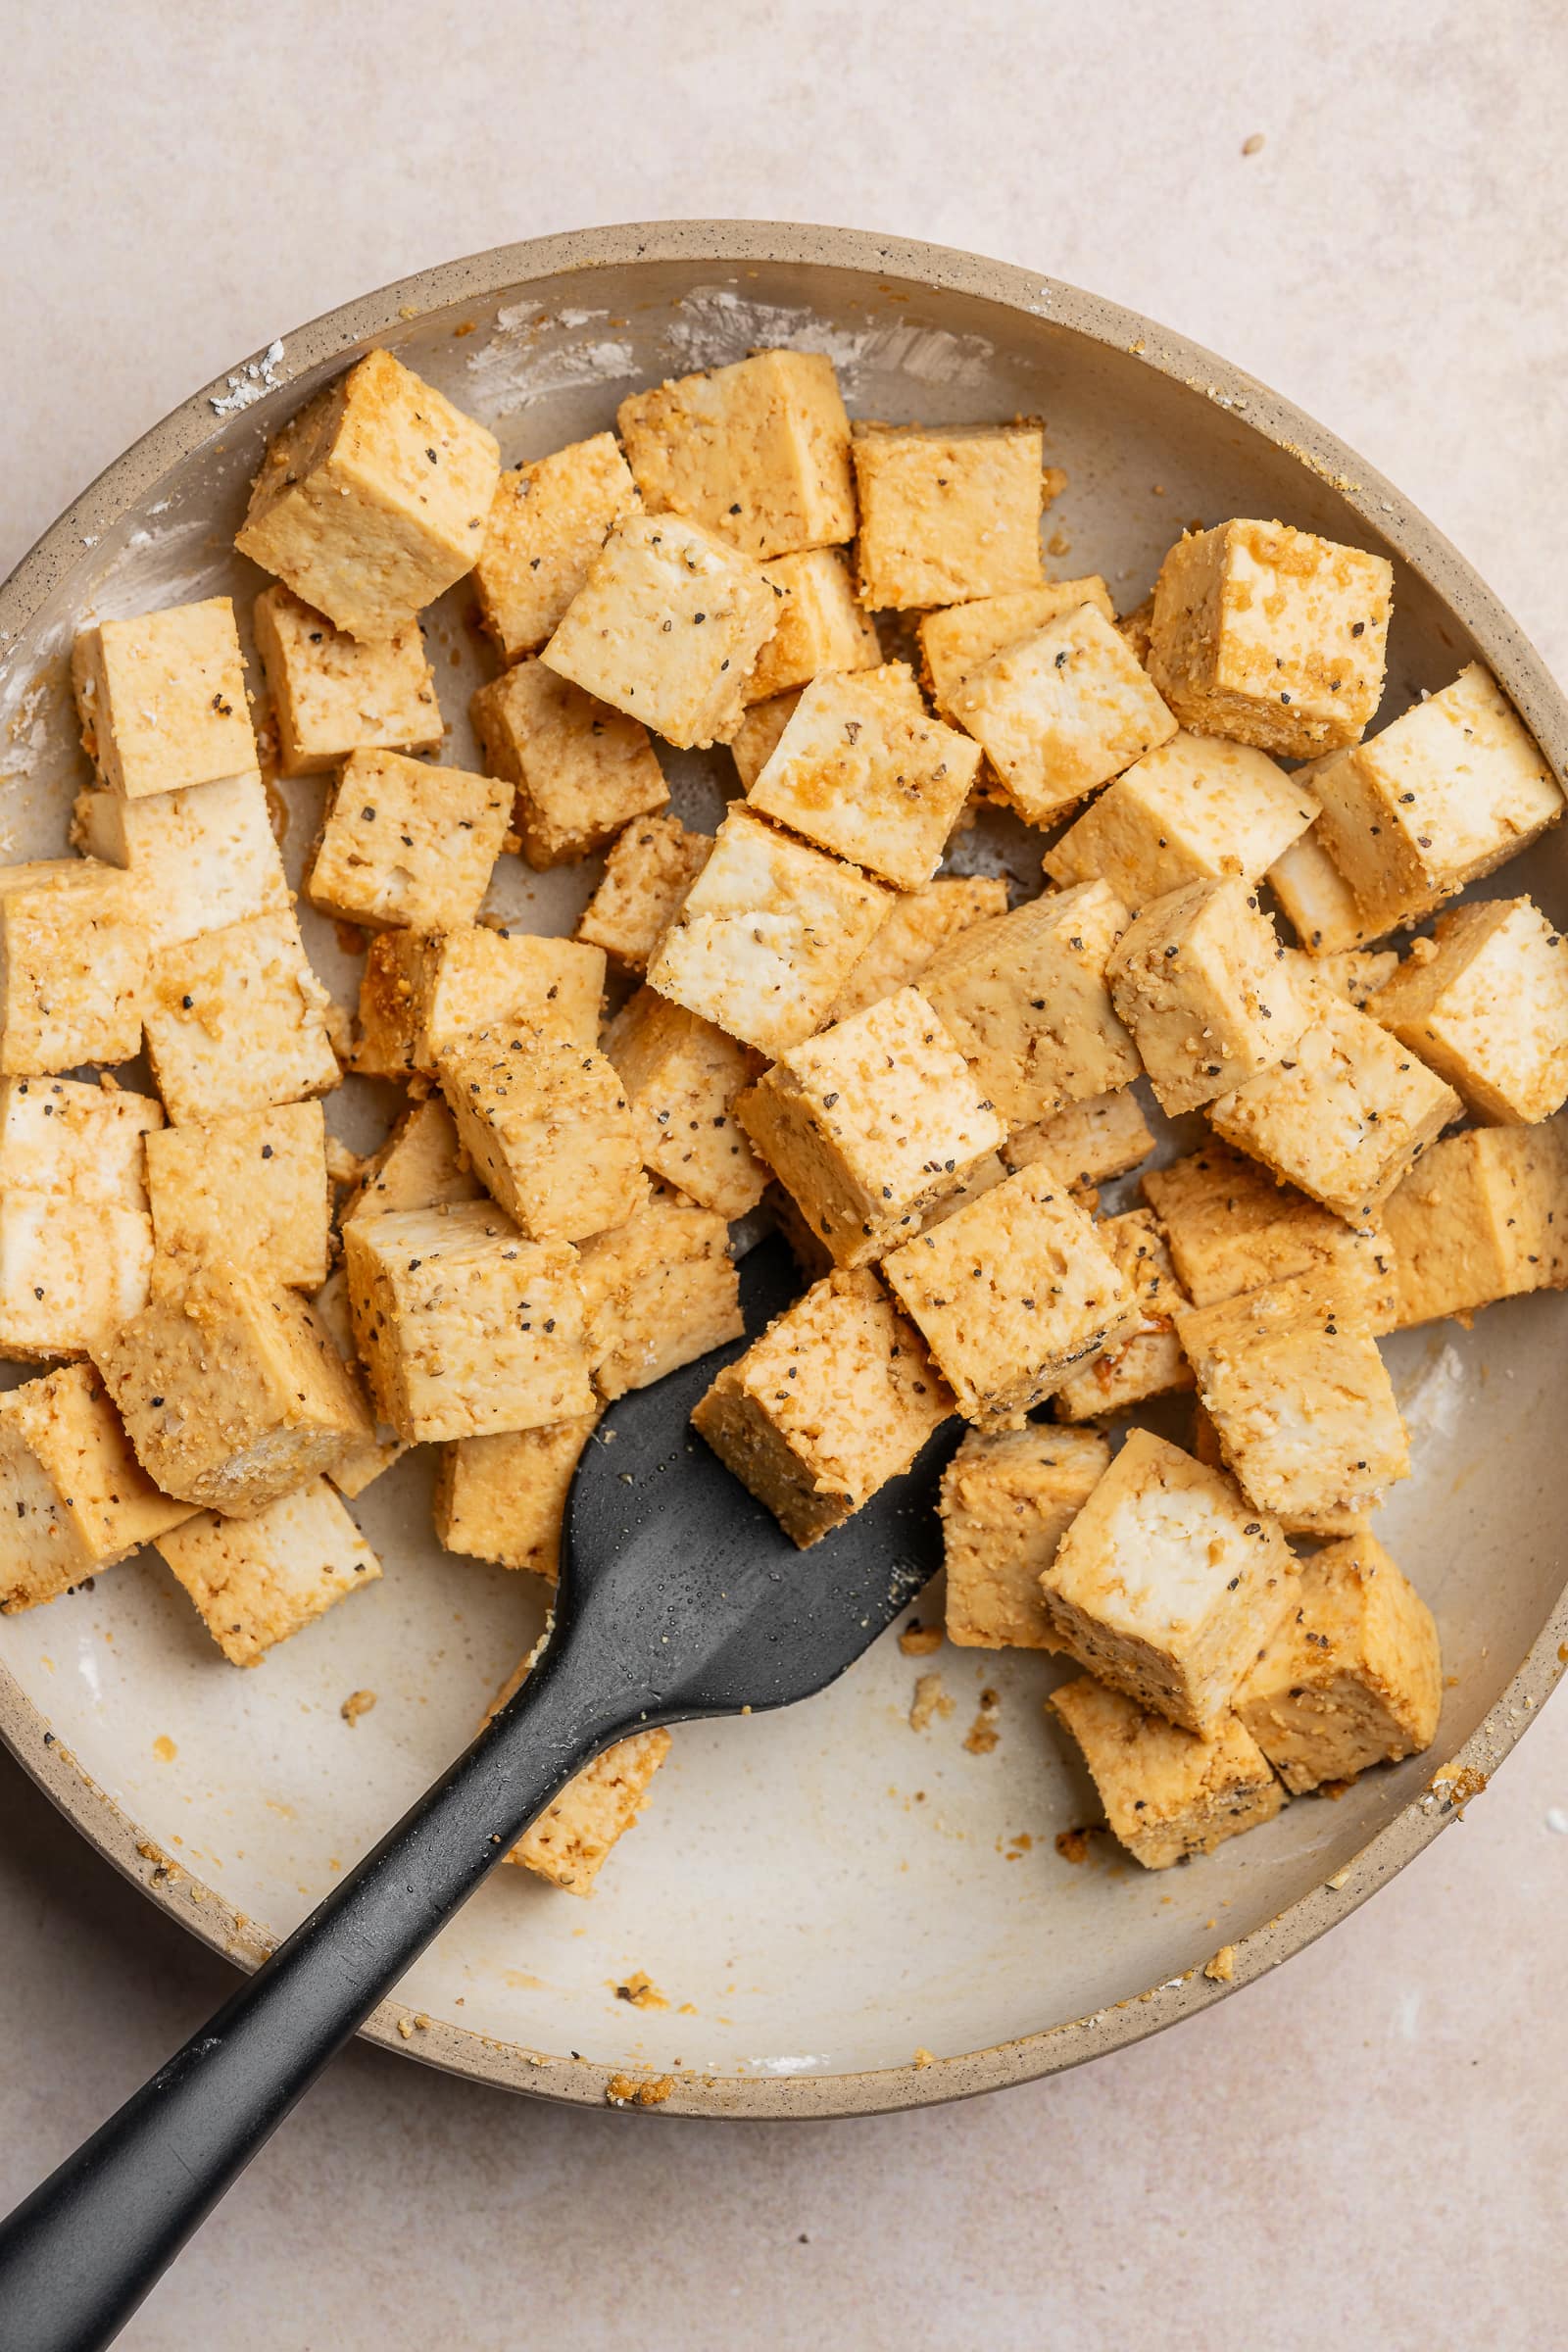 Cubed tofu tossed in seasonings and cornstarch until coated.